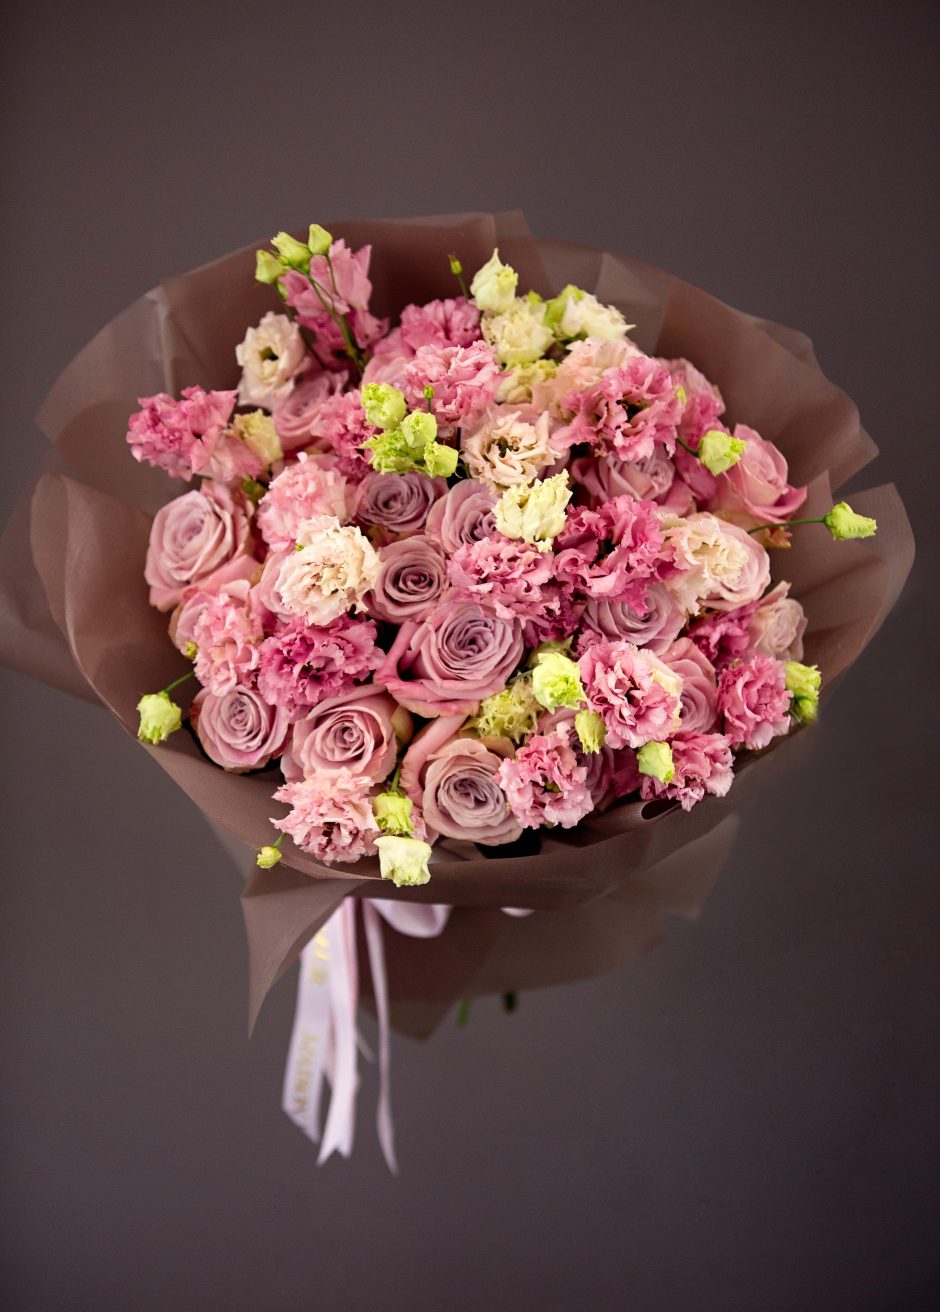 Sugar Rose - pink faith rose and European fluffy lisianthus - Maison la Fleur